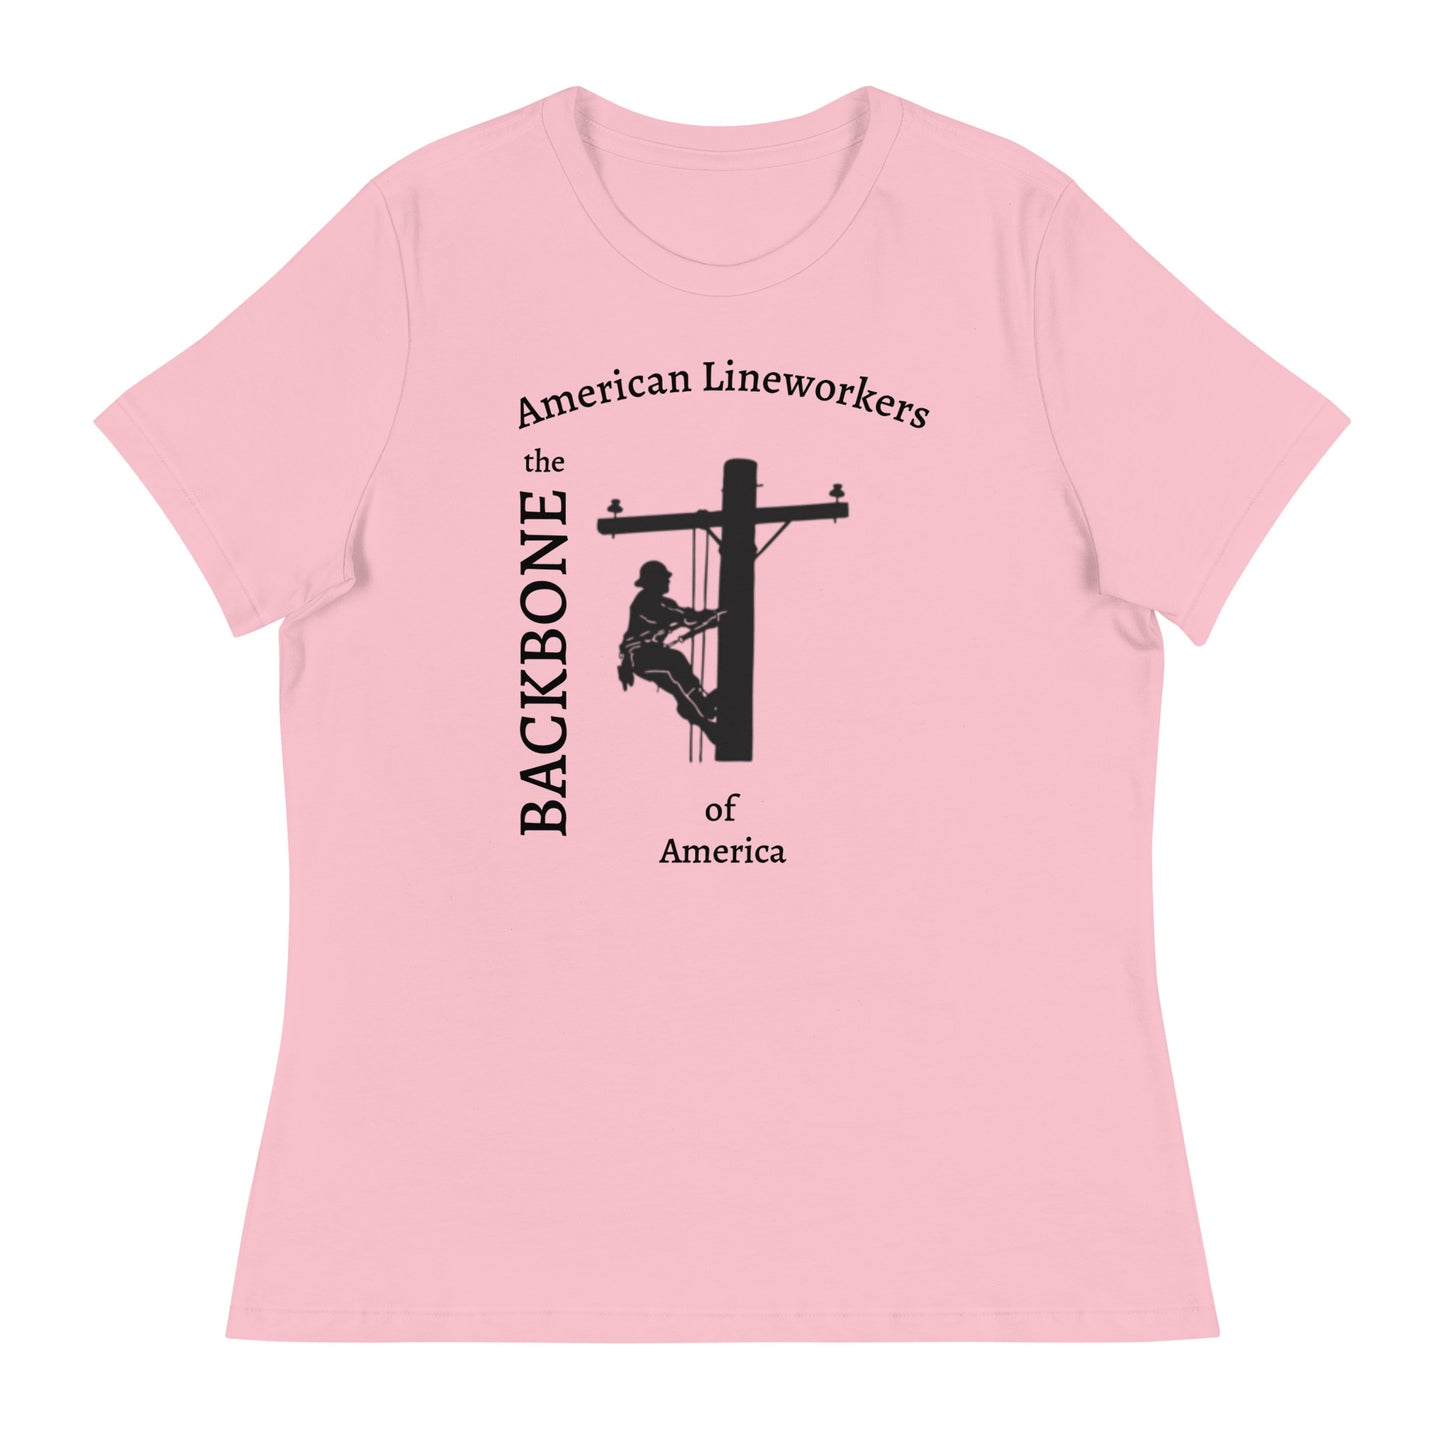 American Lineworkers Backbone of America women's tee